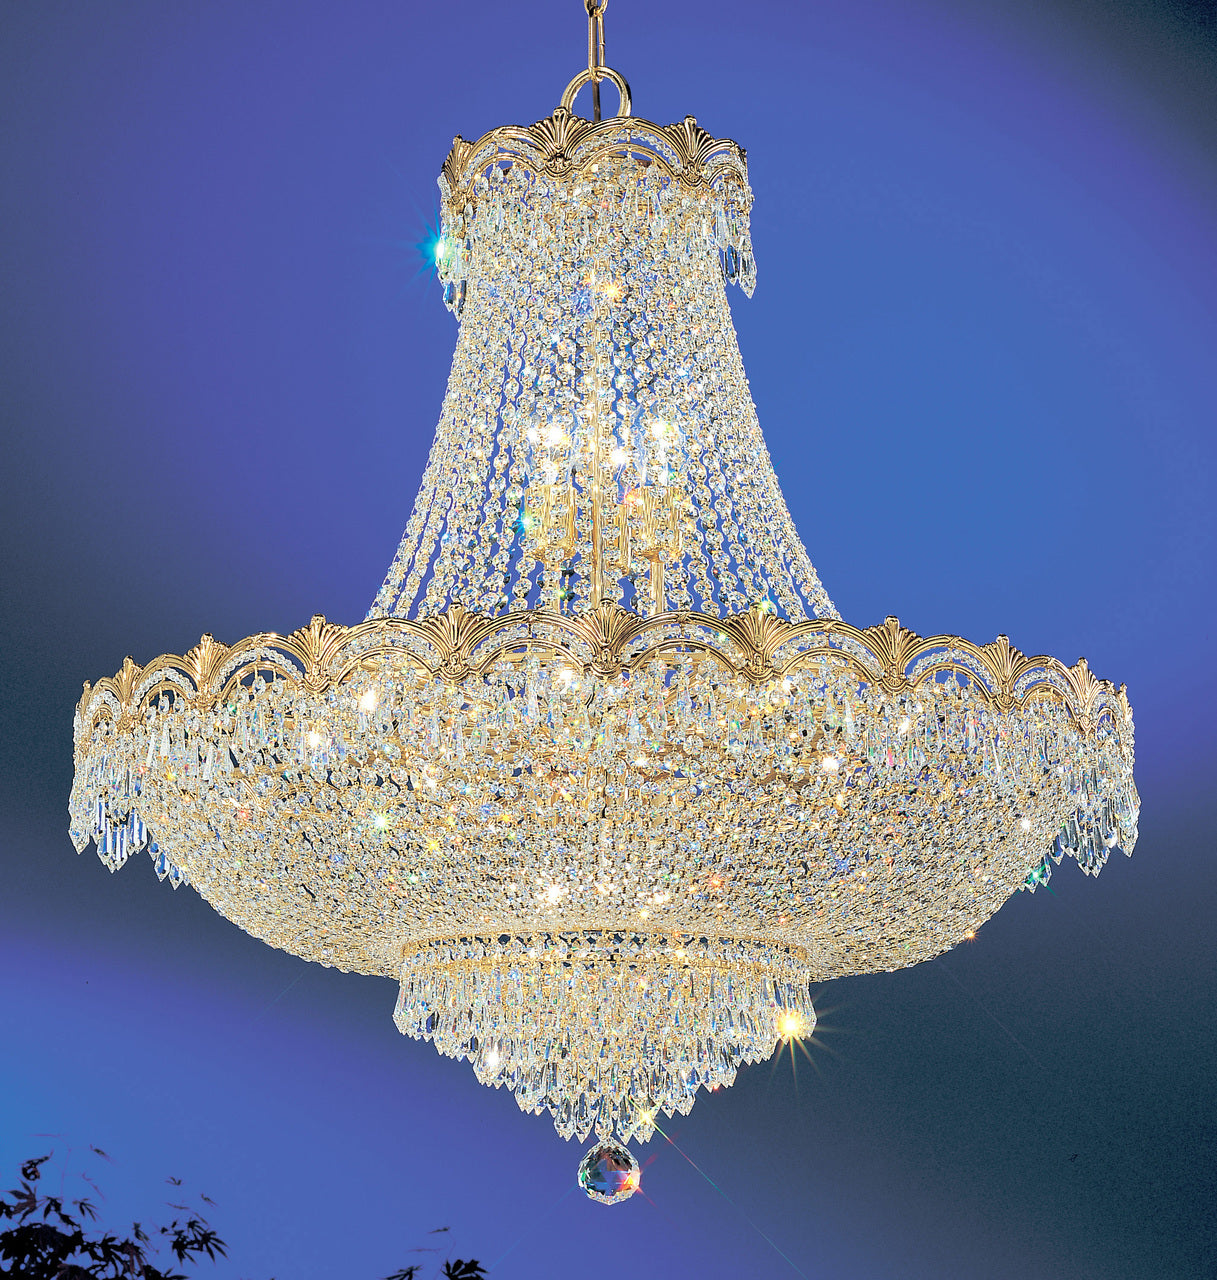 Classic Lighting 1858 G S Regency II Crystal Chandelier in 24k Gold (Imported from Spain)